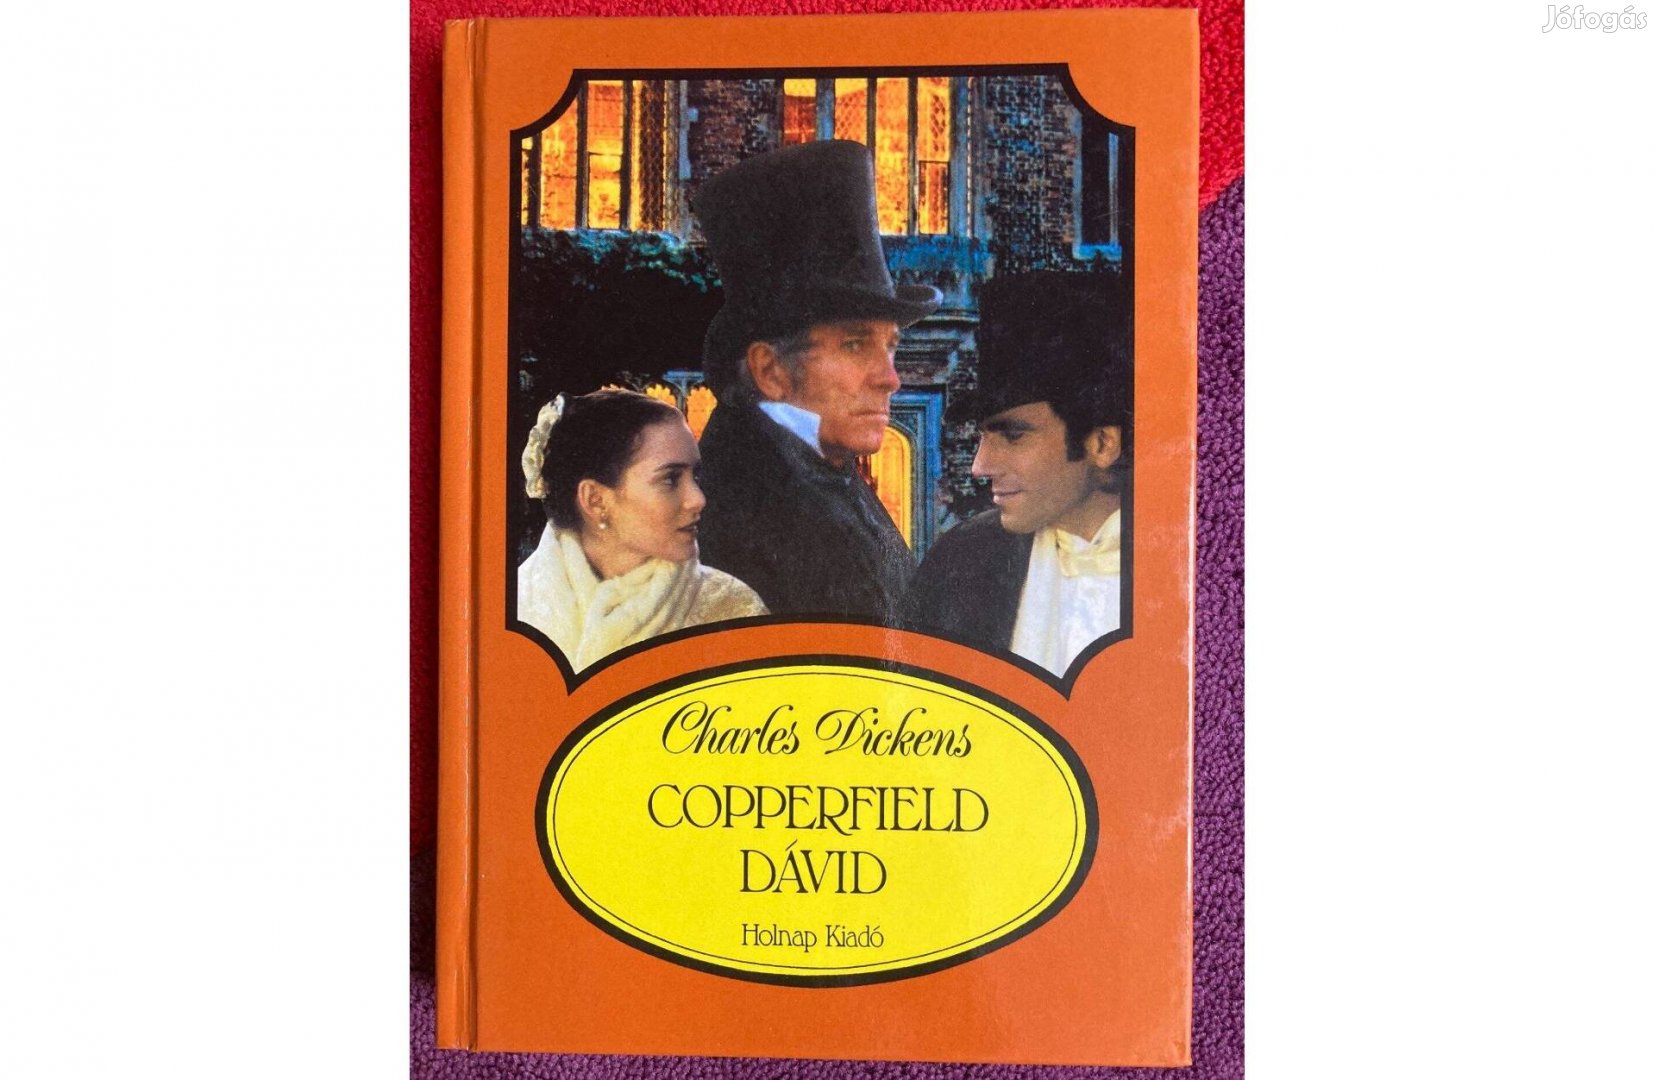 Charles Dickens Copperfield Dávid